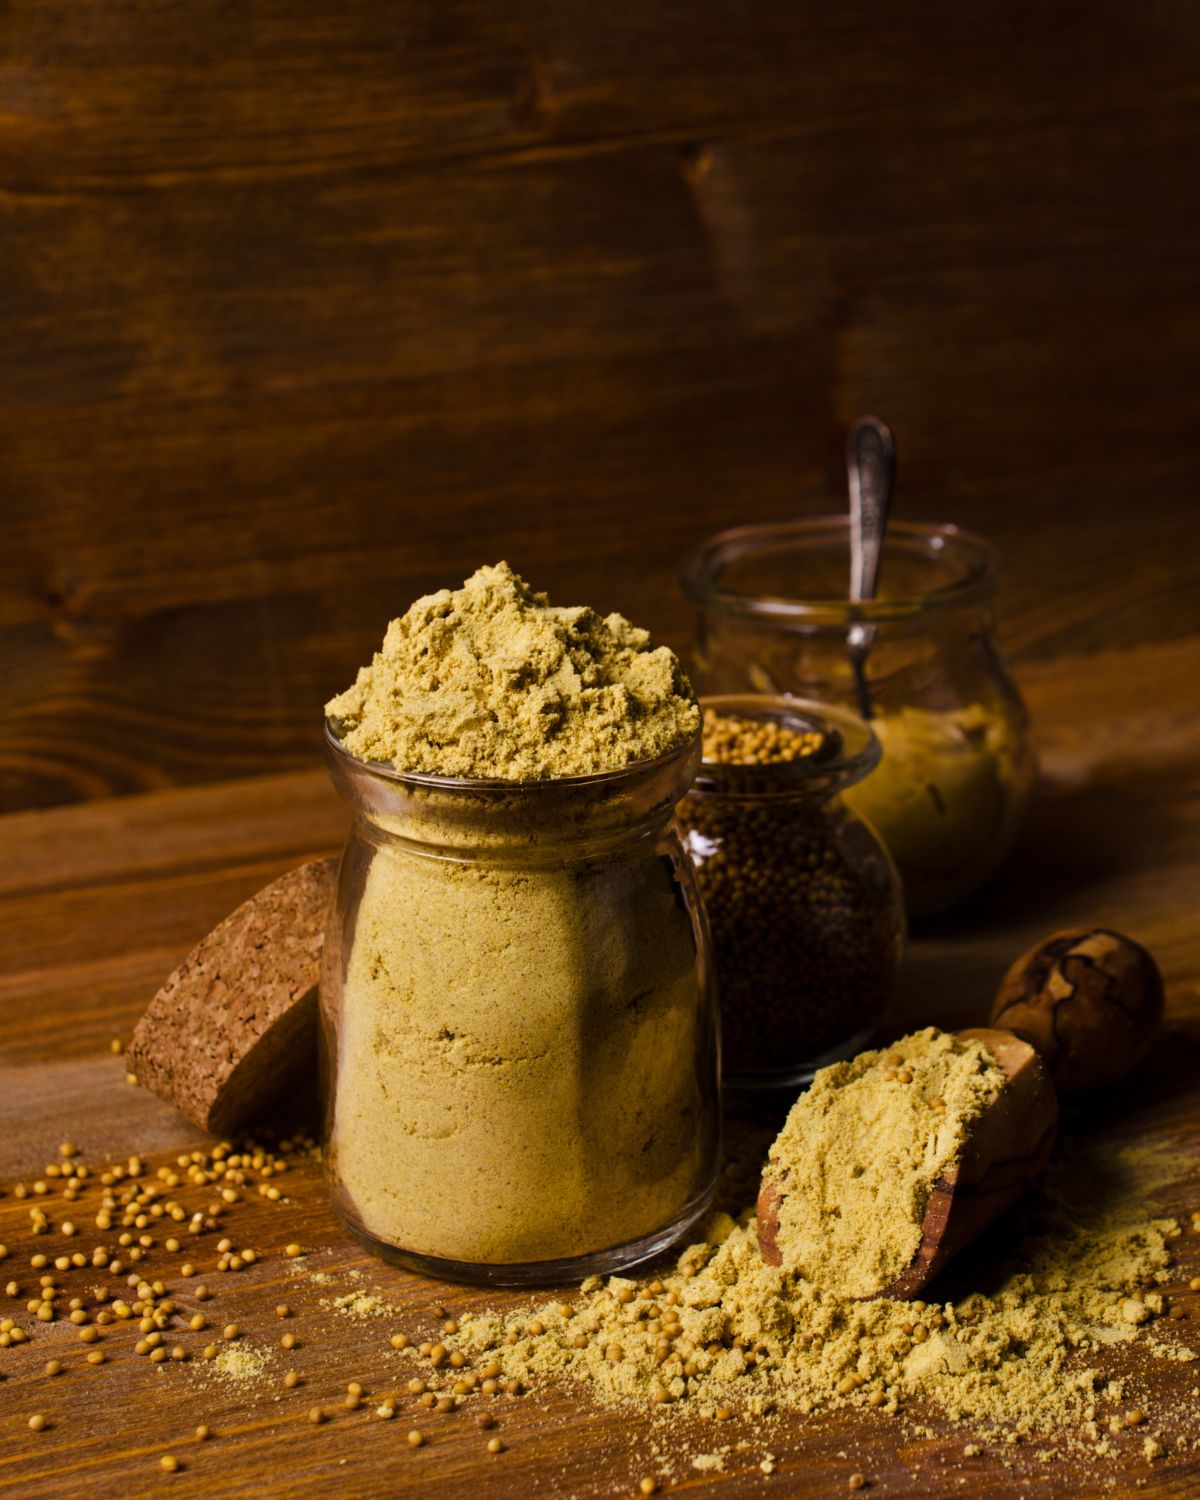 Mustard powder in a glass jar.